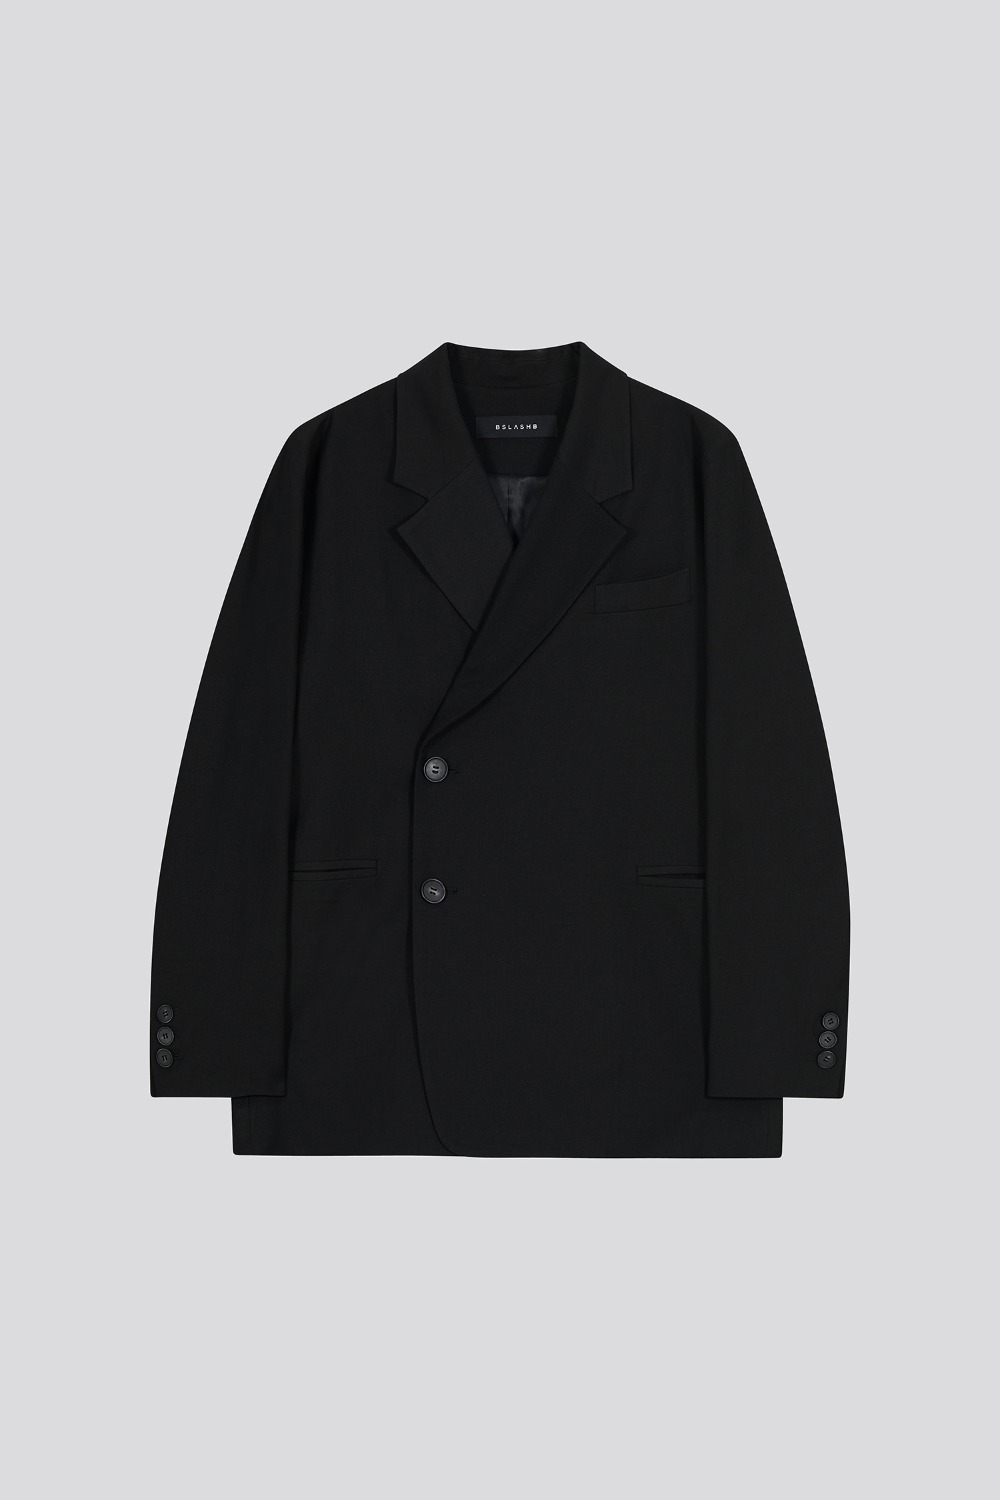 Crossover jacket in black